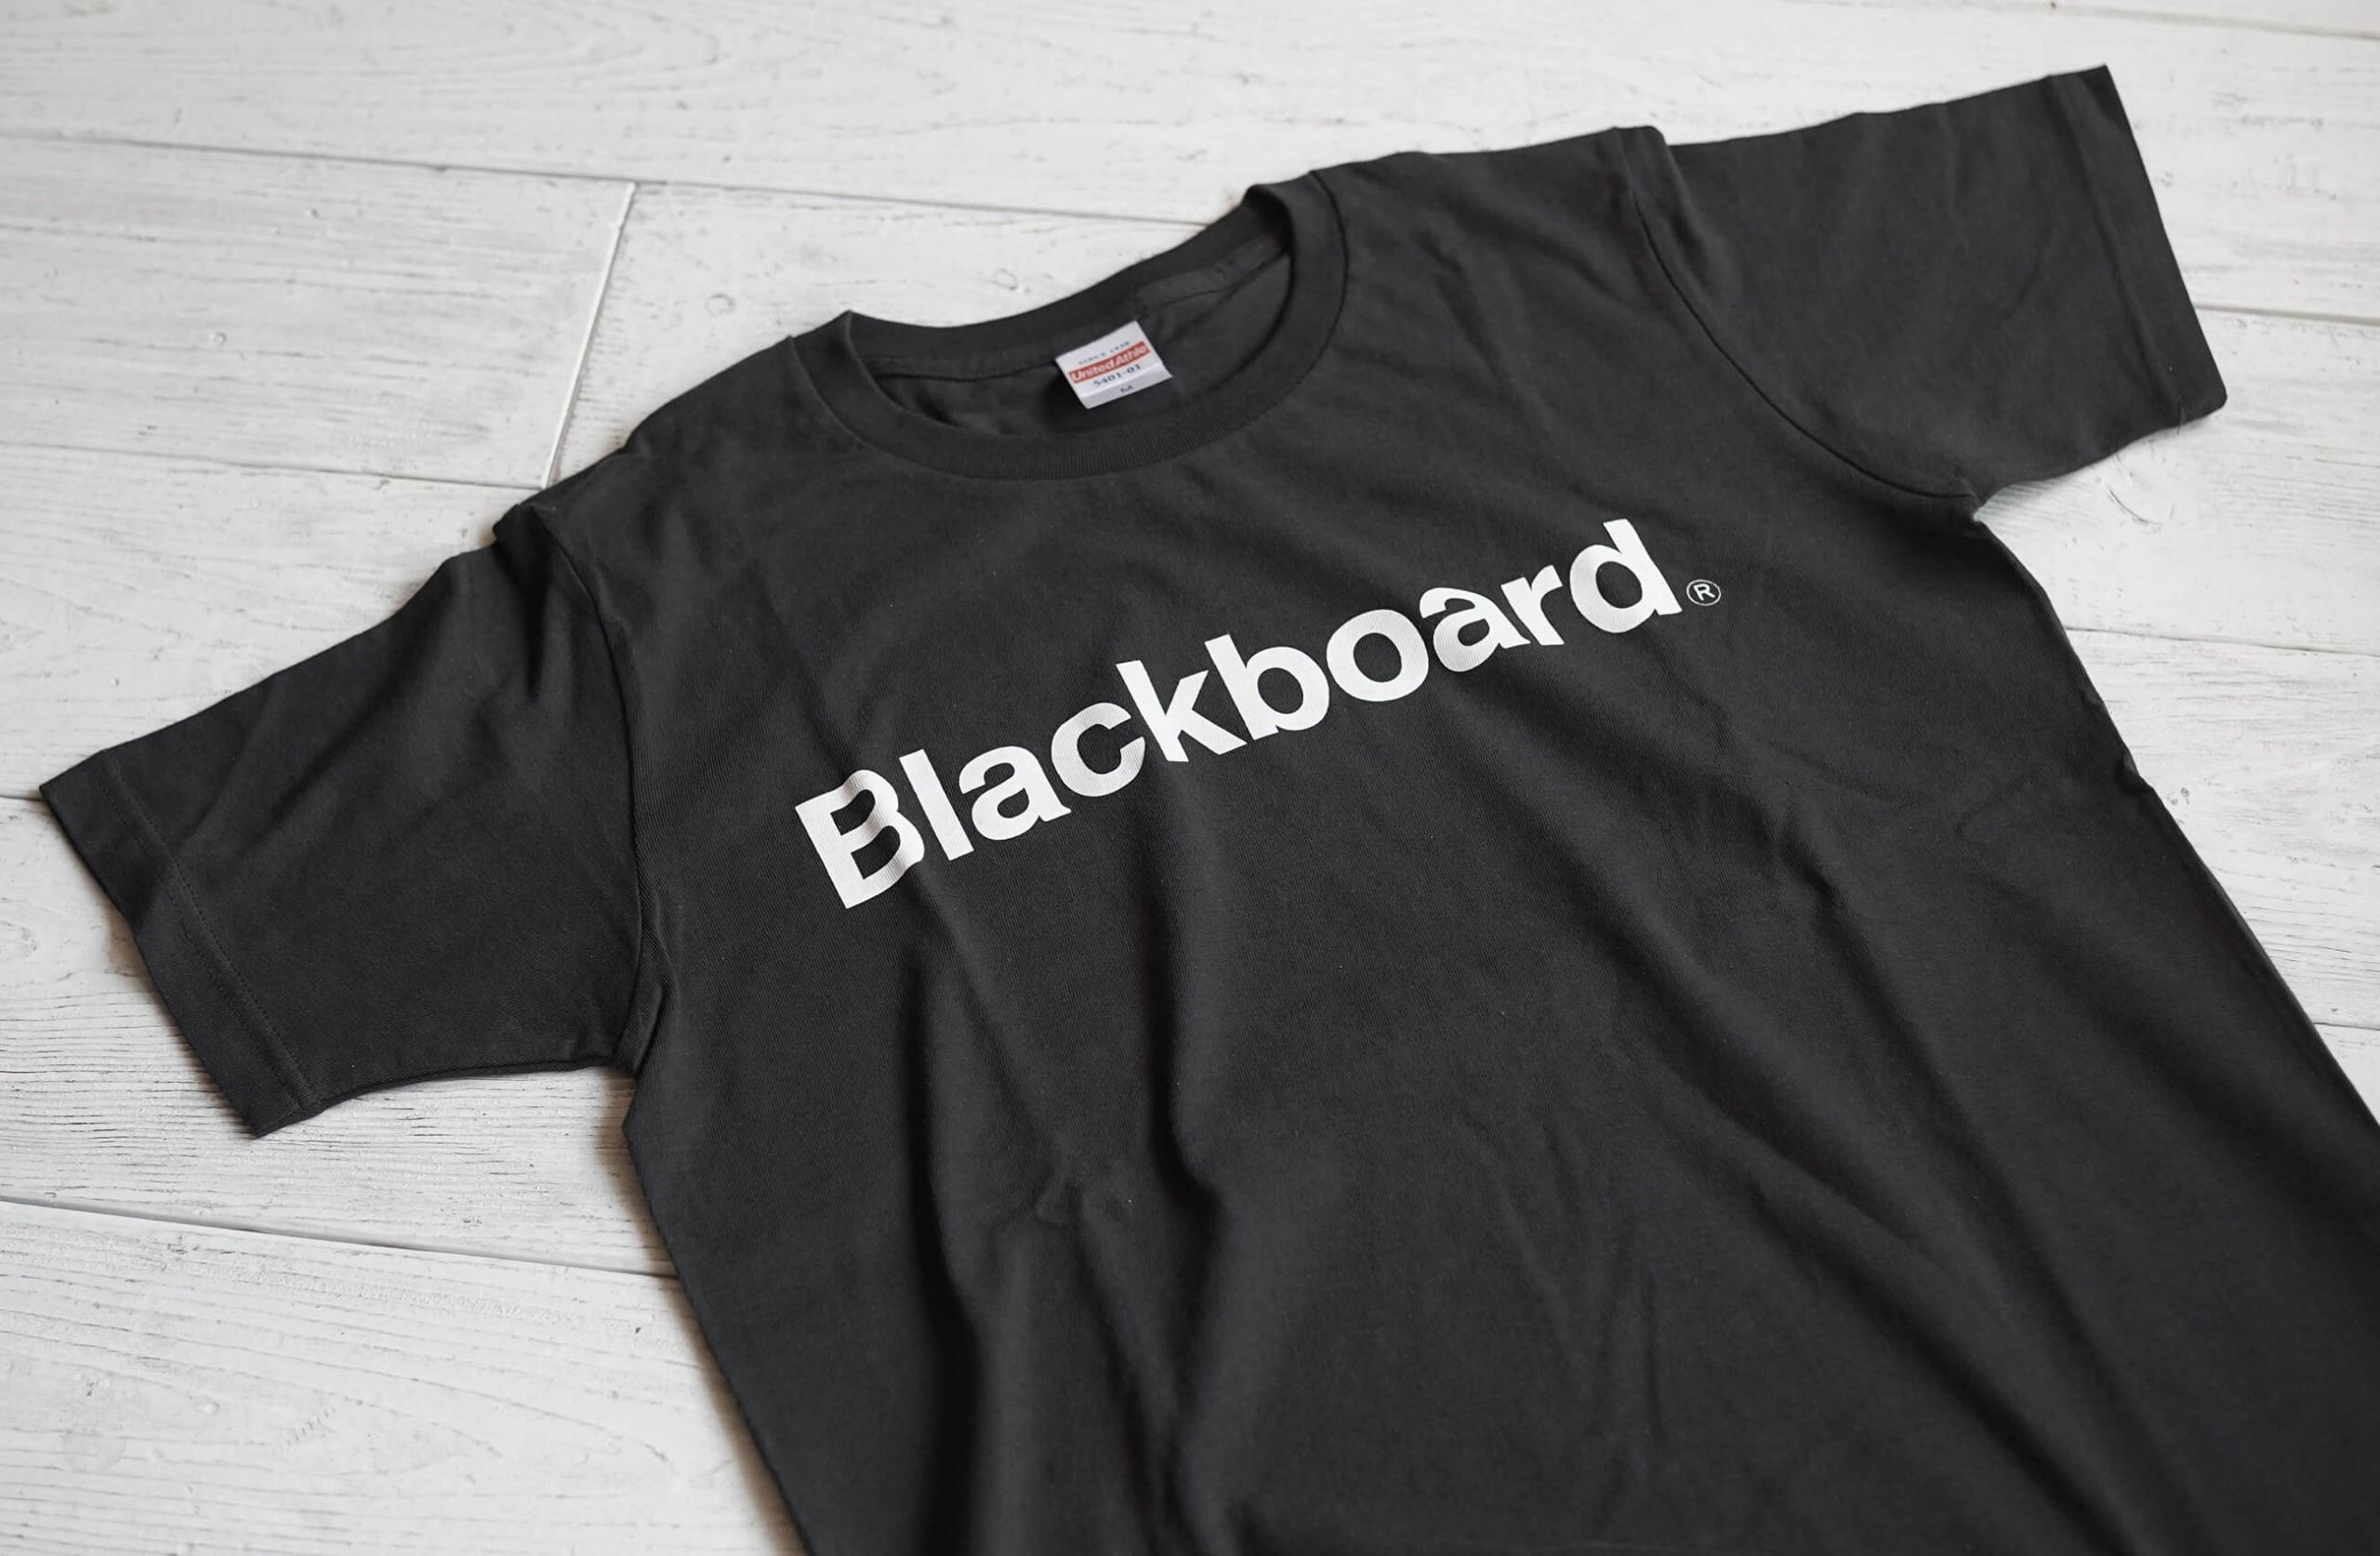 Blackboard T-shirt